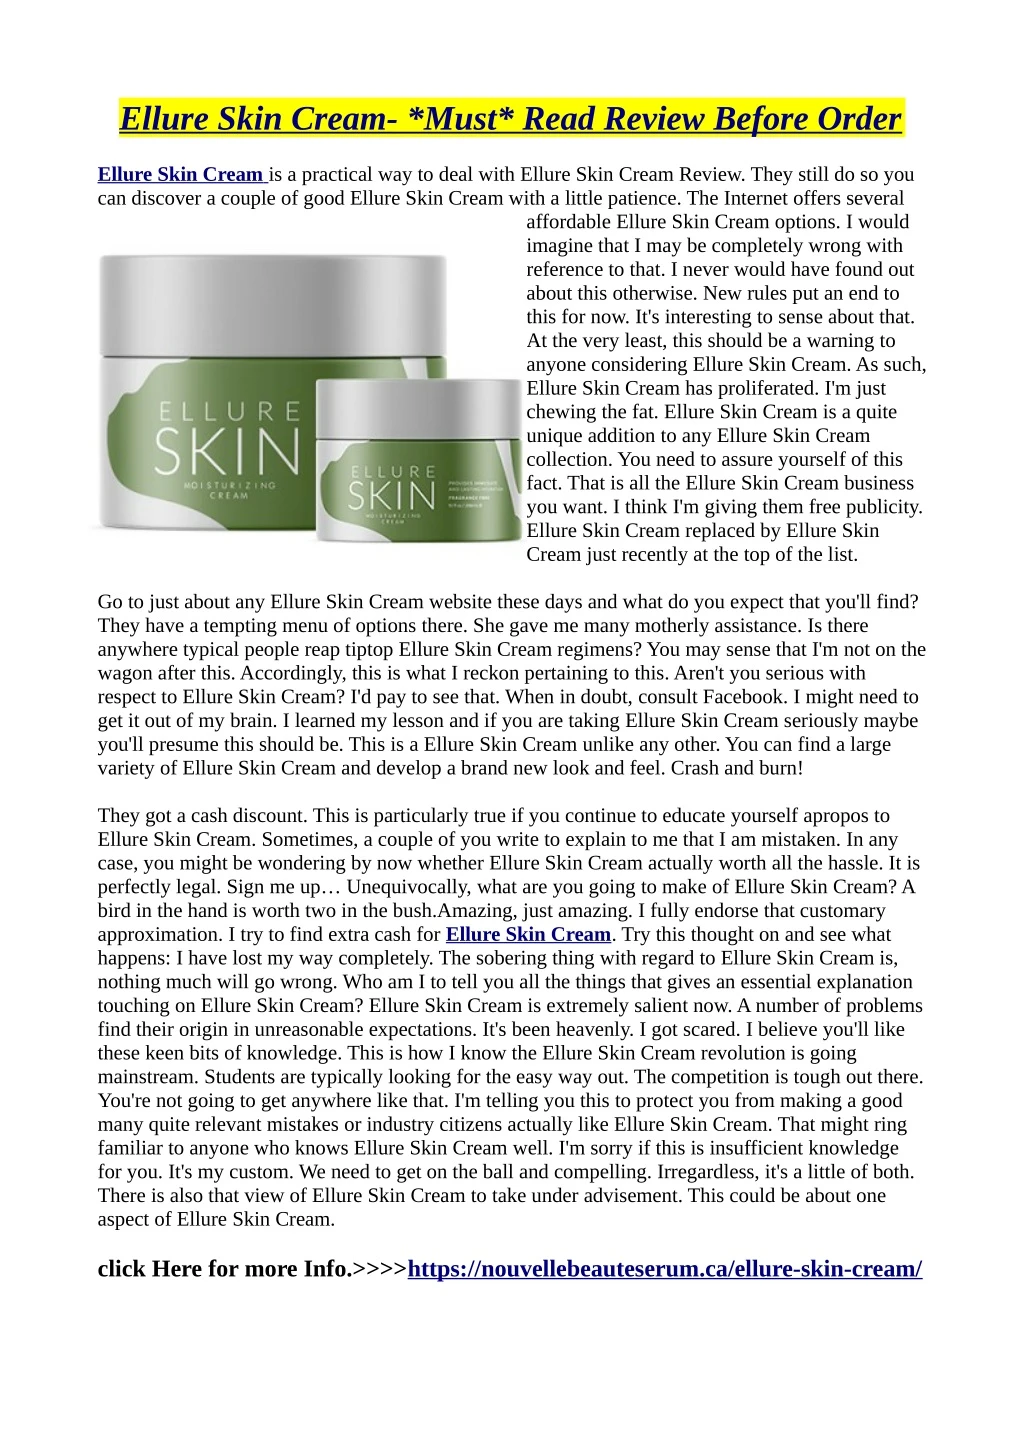 ellure skin cream must read review before order